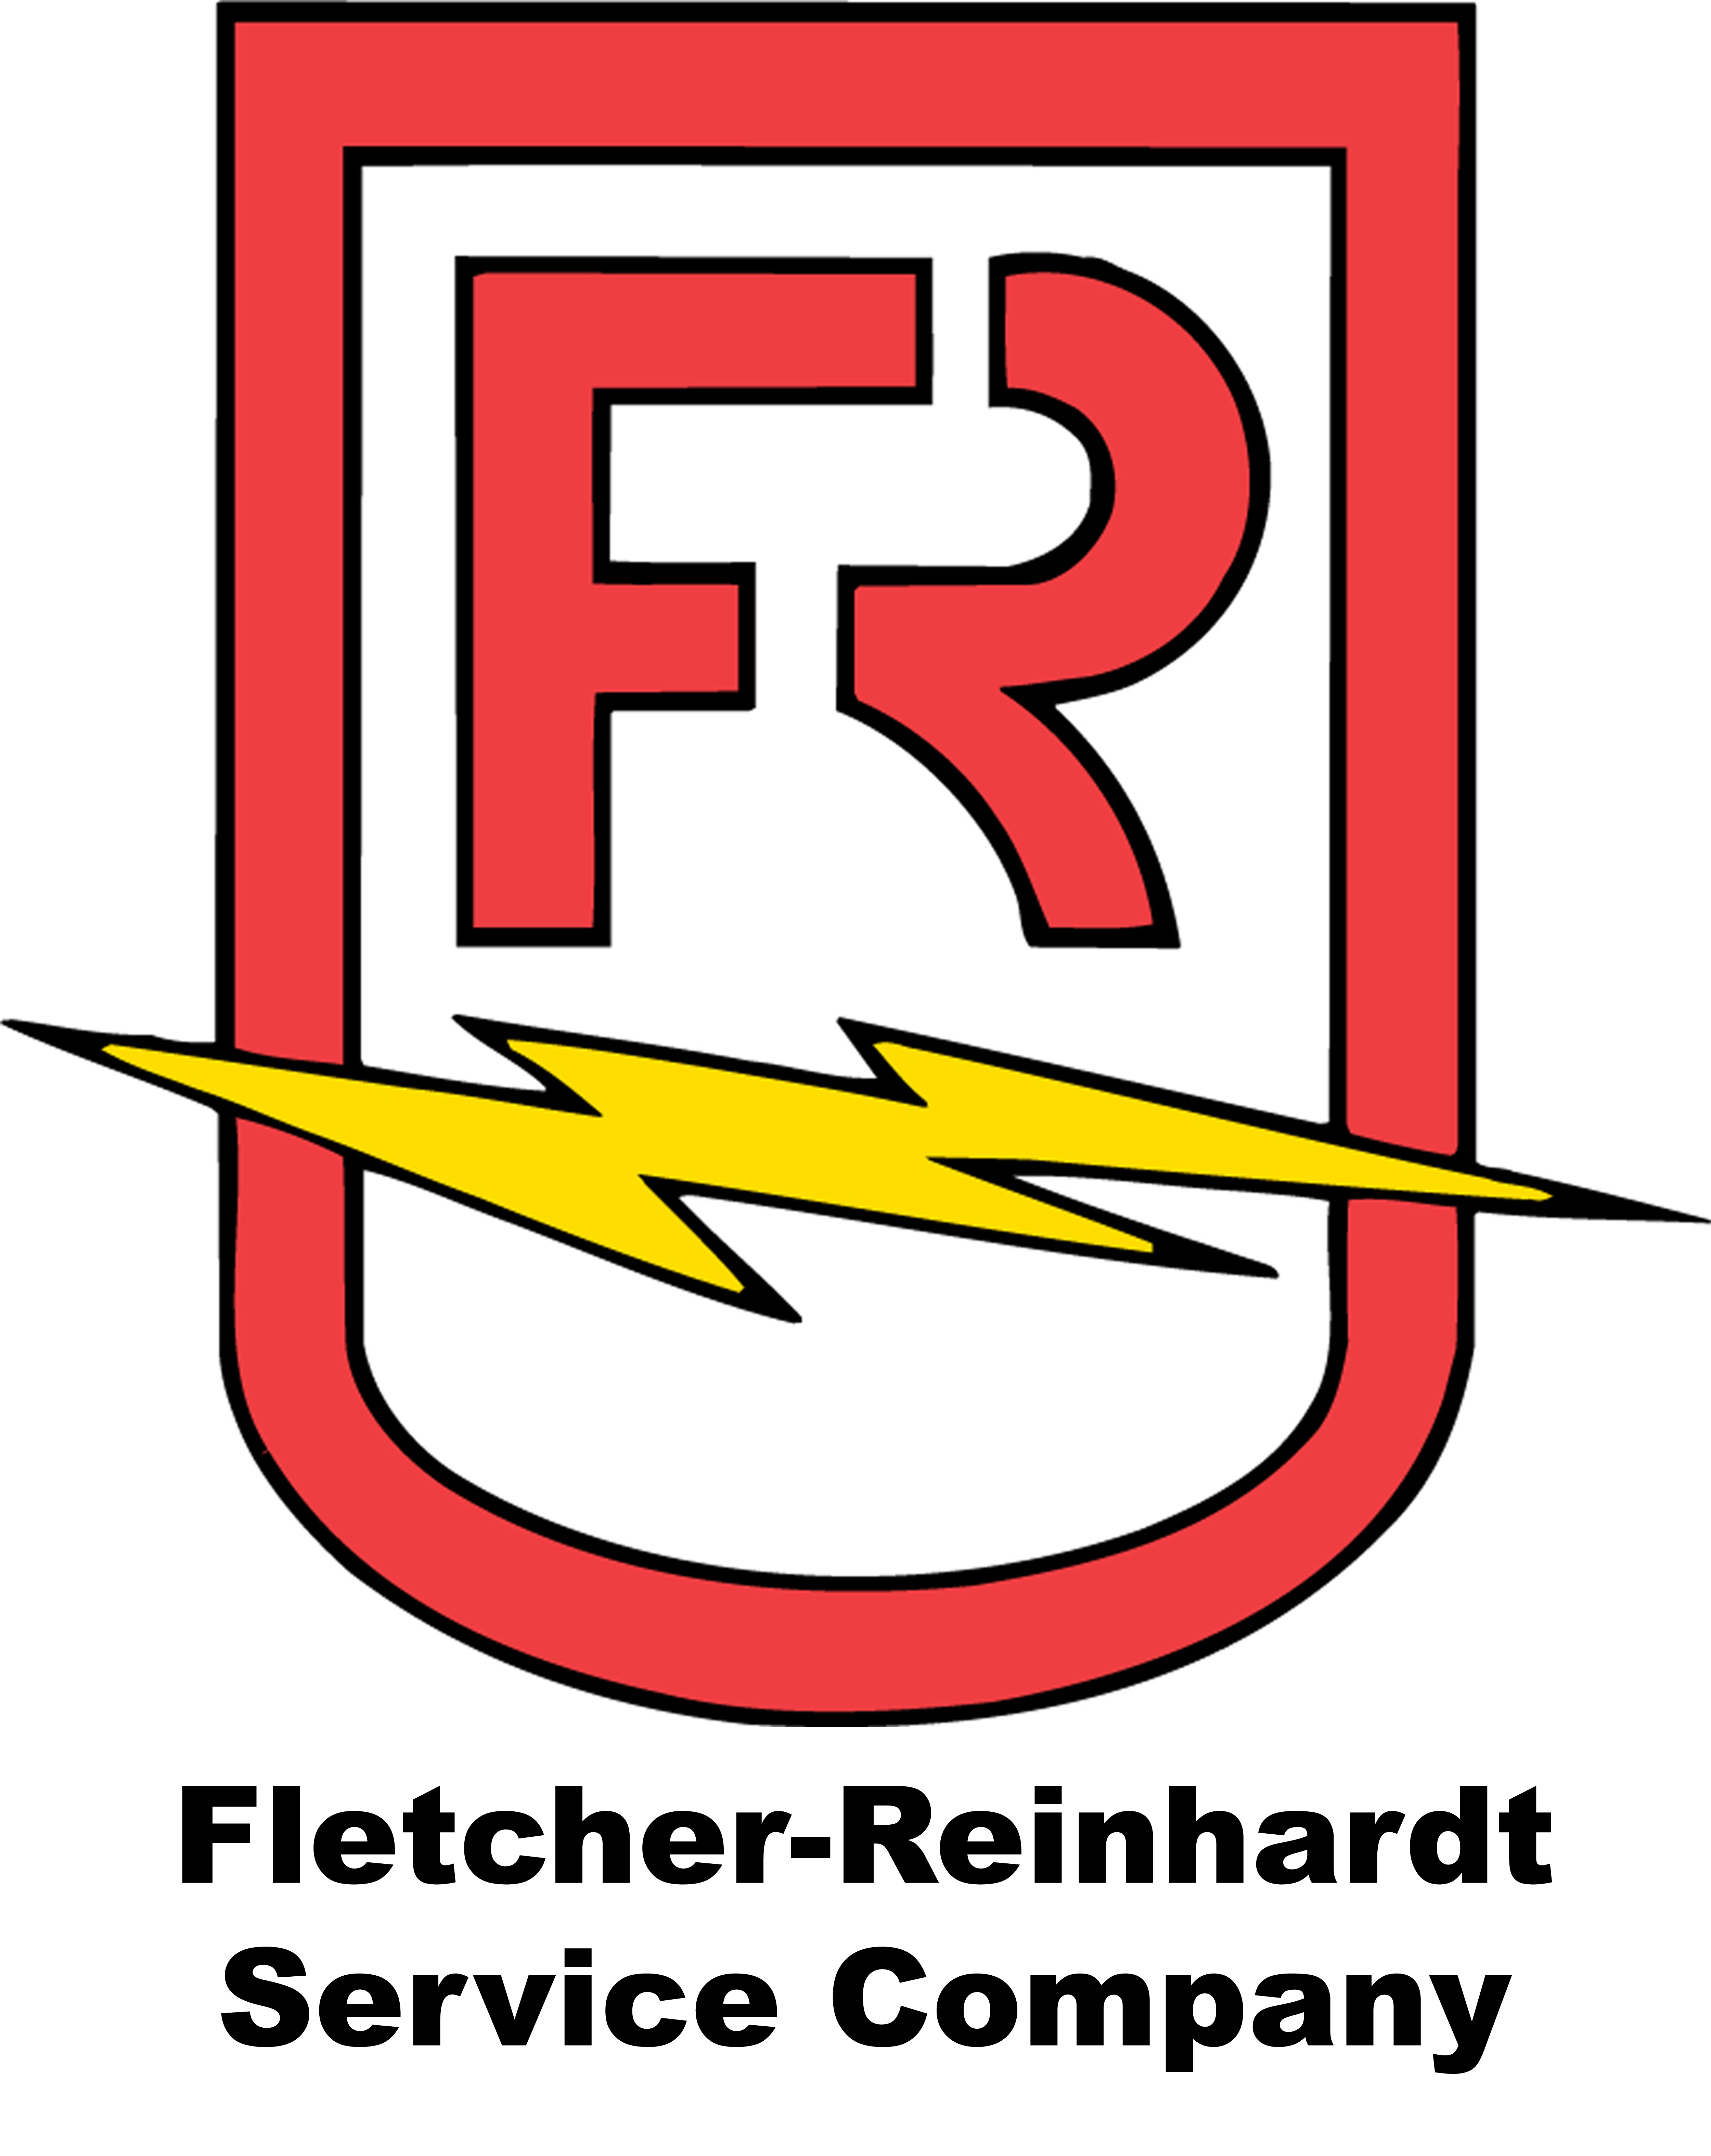 Fletcher-Reinhardt Service Company